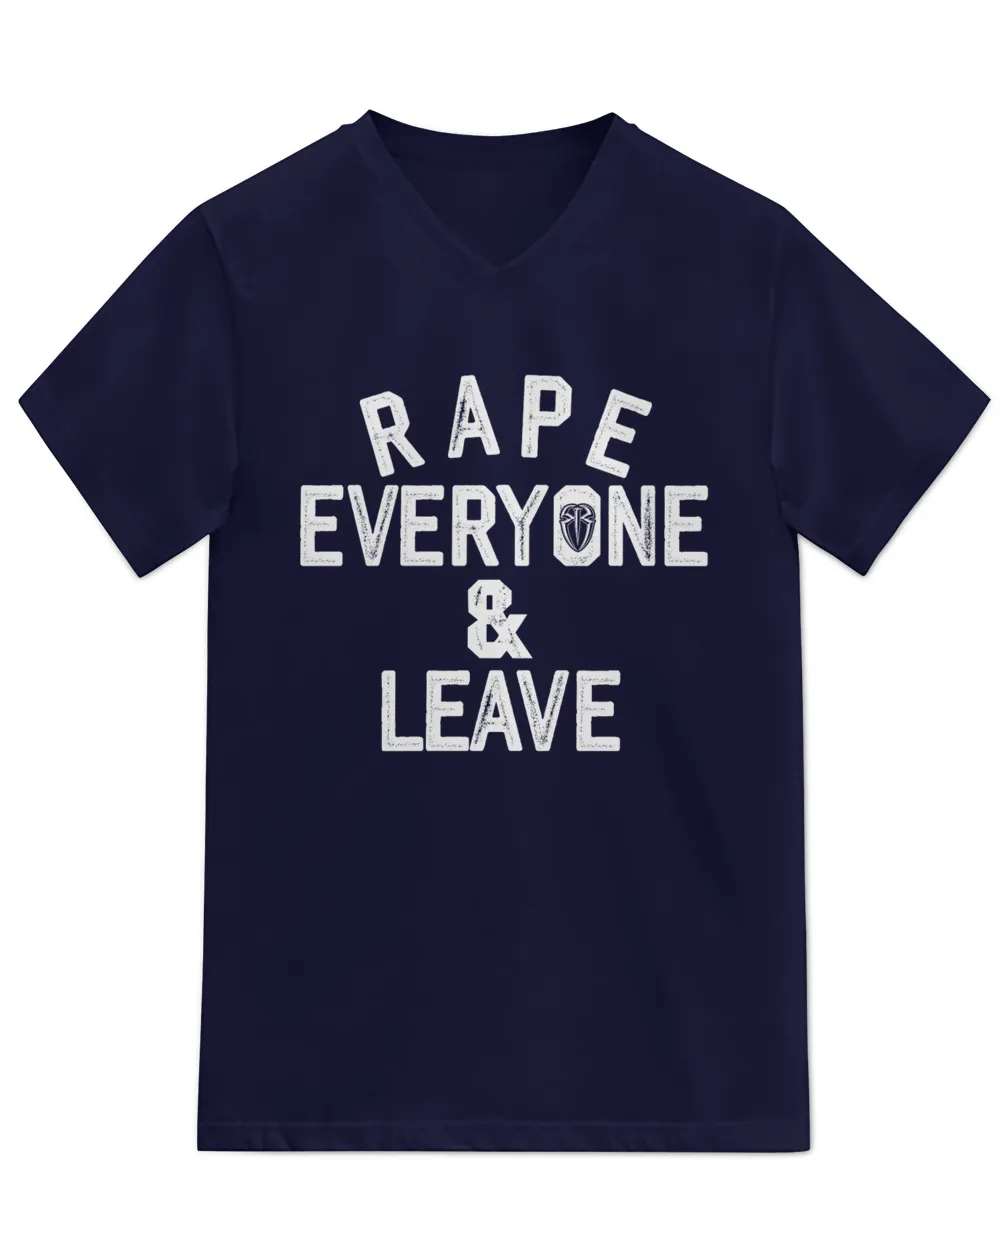 rape everyone and leave1-01